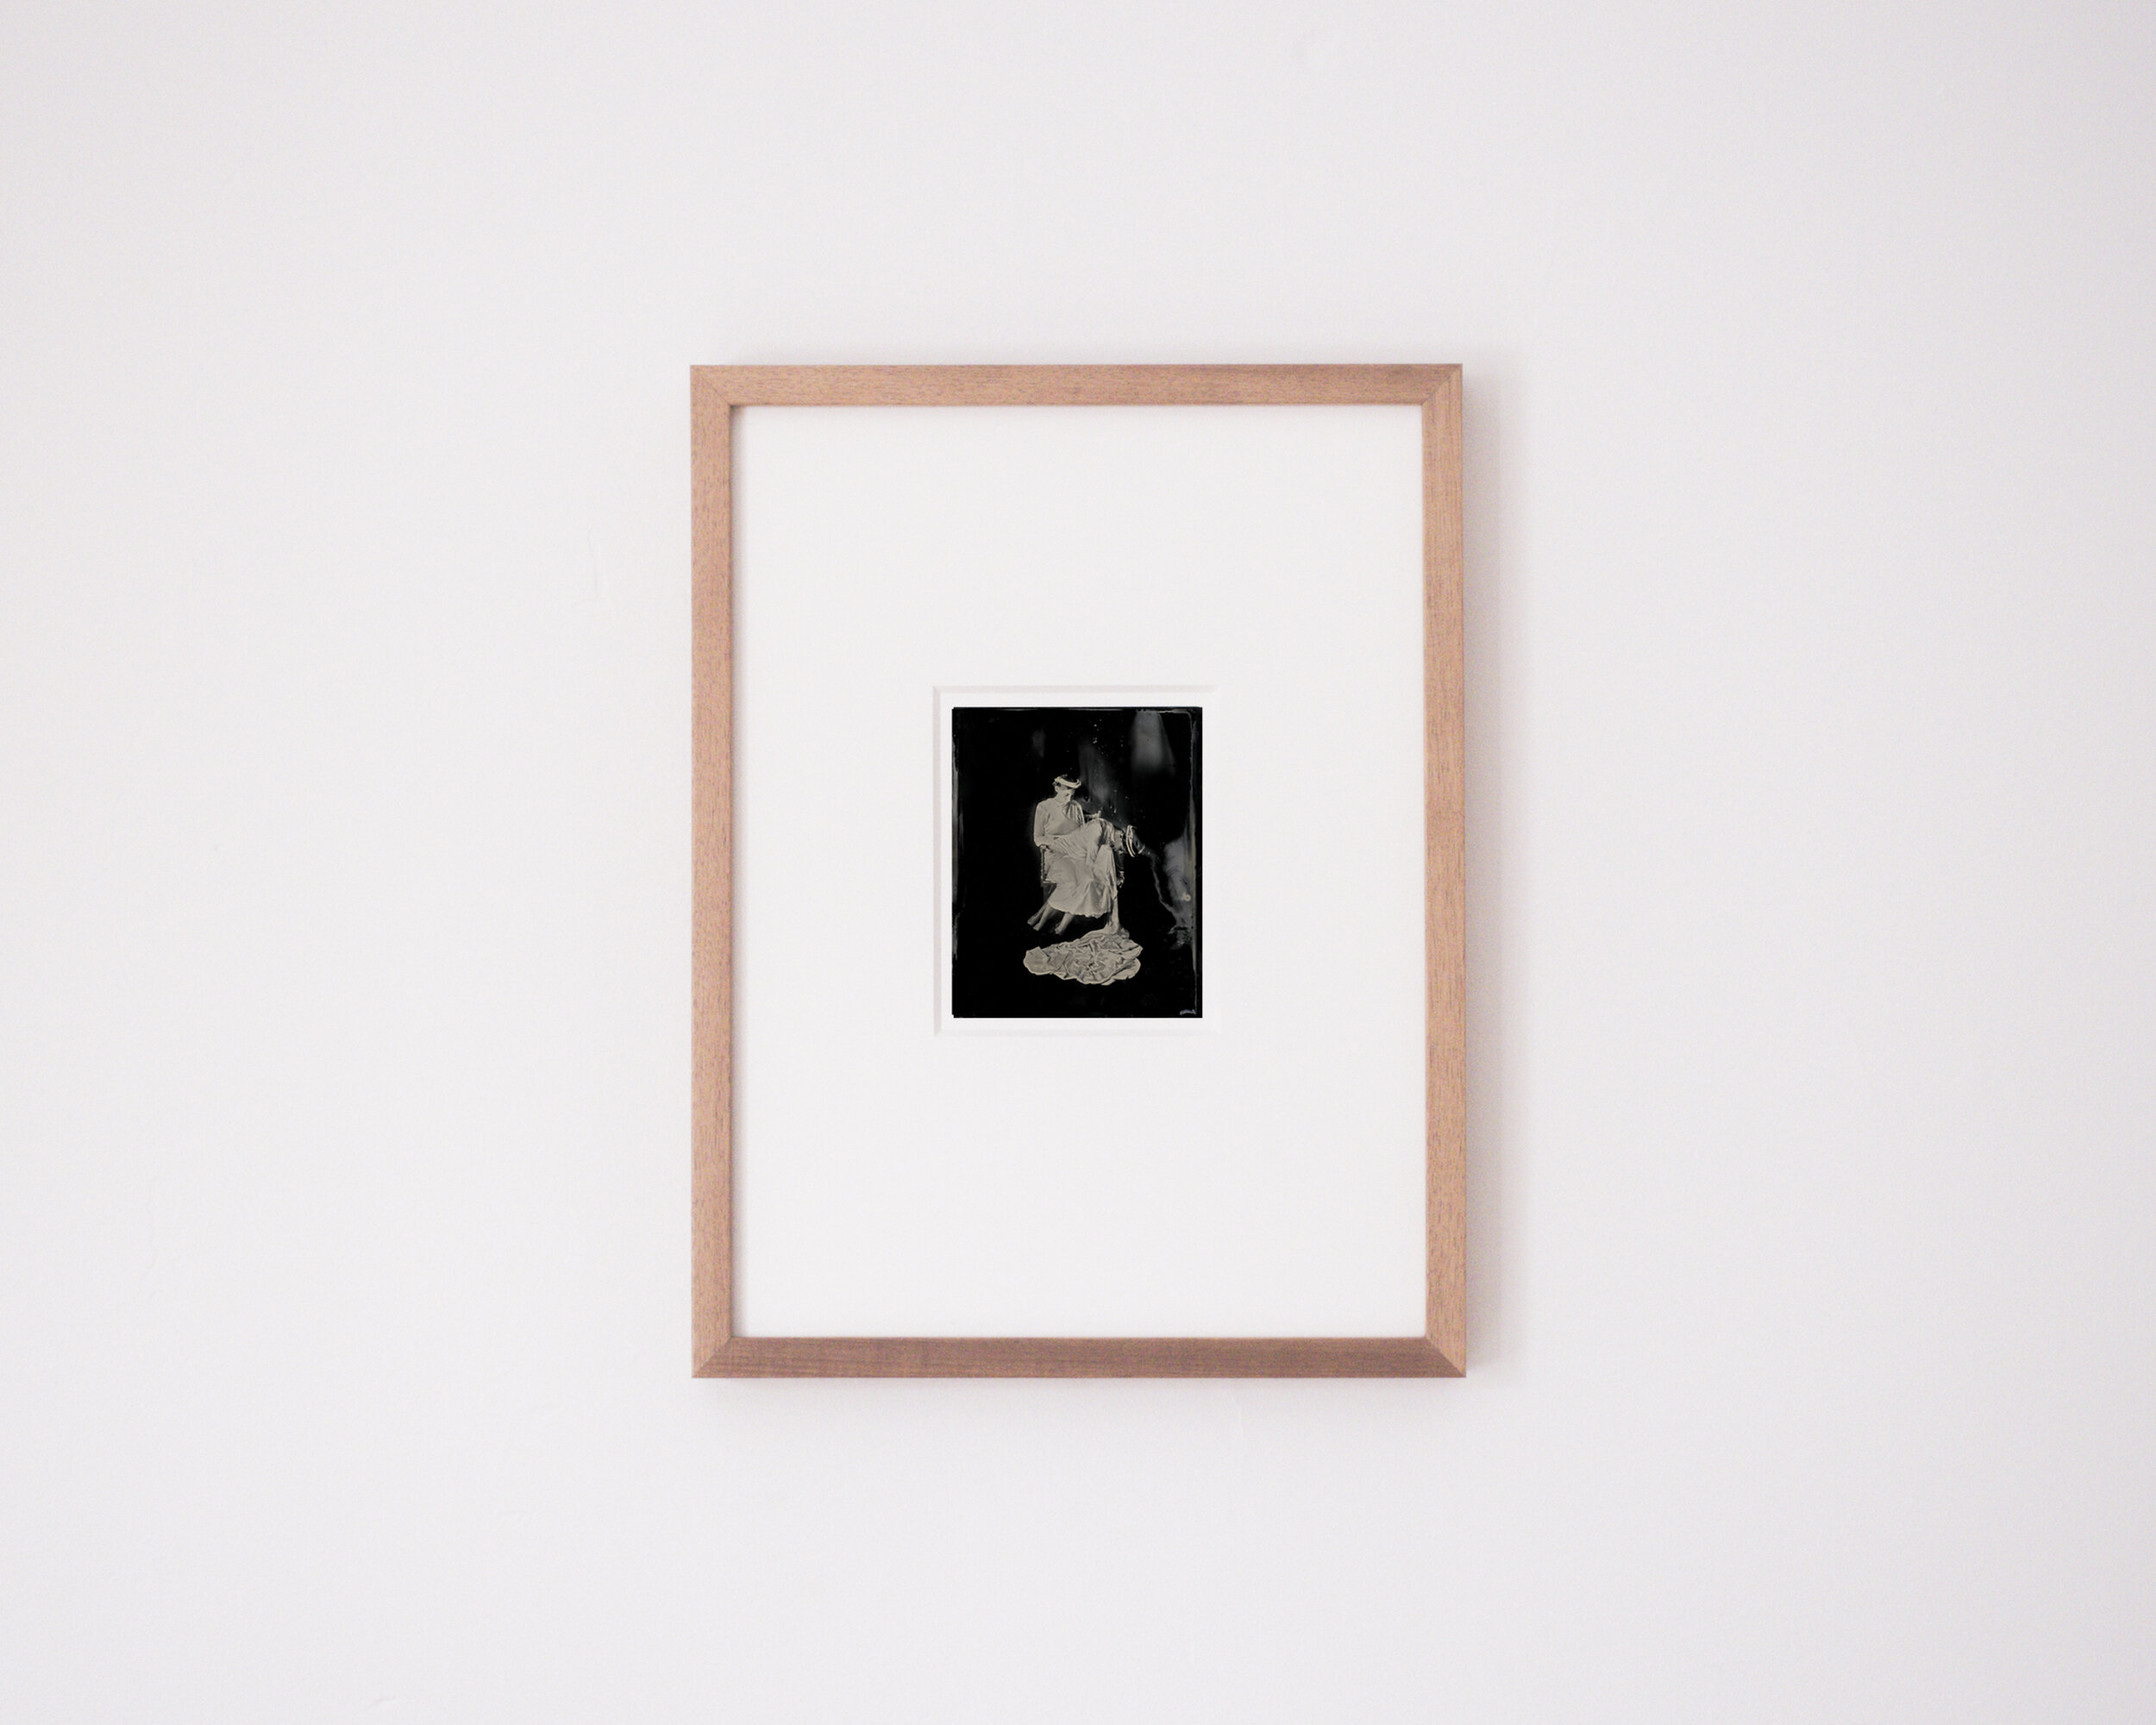   Caducity’s Daughters III  (framed 4 x 5” aluminotype, 2020) 